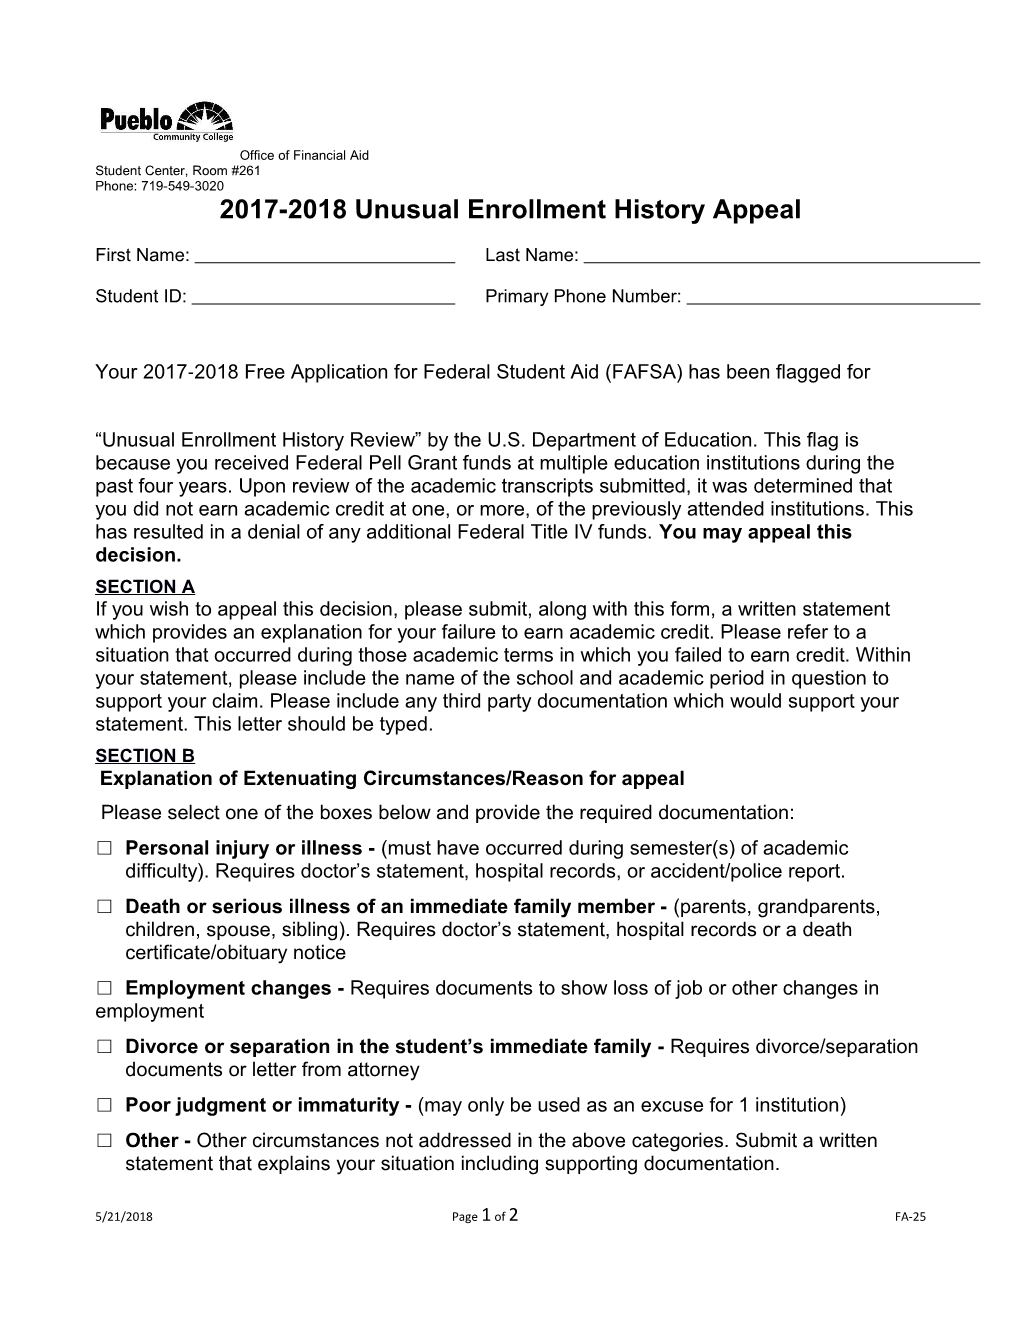 2017-2018 Unusual Enrollment Historyappeal